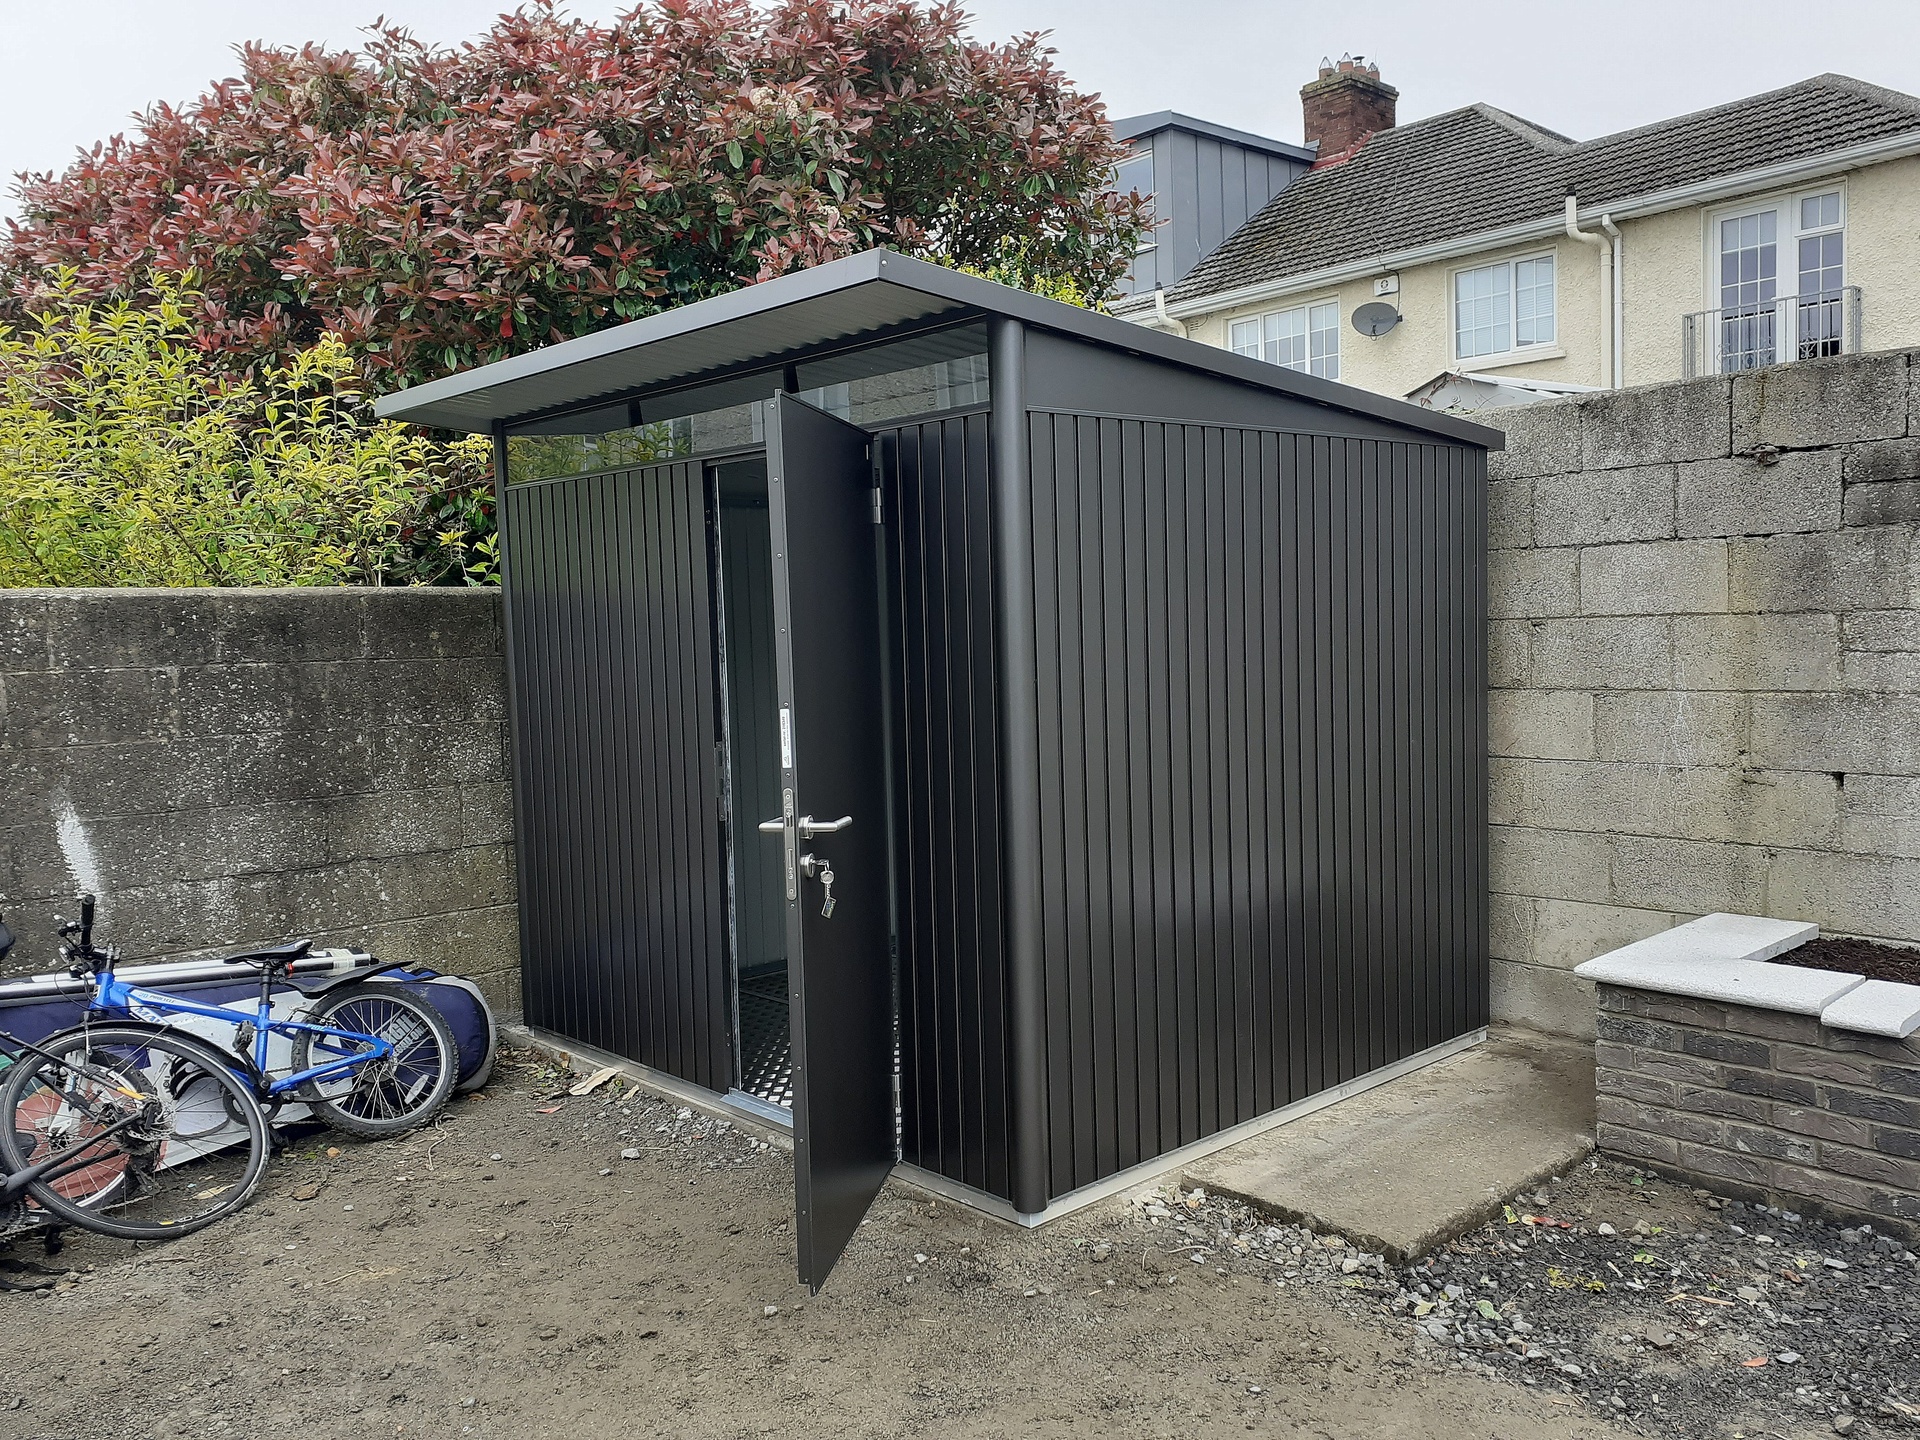 Biohort AvantGarde A6 Garden Shed in metallic dark grey, modern secure & weatherproof  garden storage - supplied + fitted in Raheny, Dublin 5 | Owen Chubb Garden Landscapers, Tel 087-2306128.